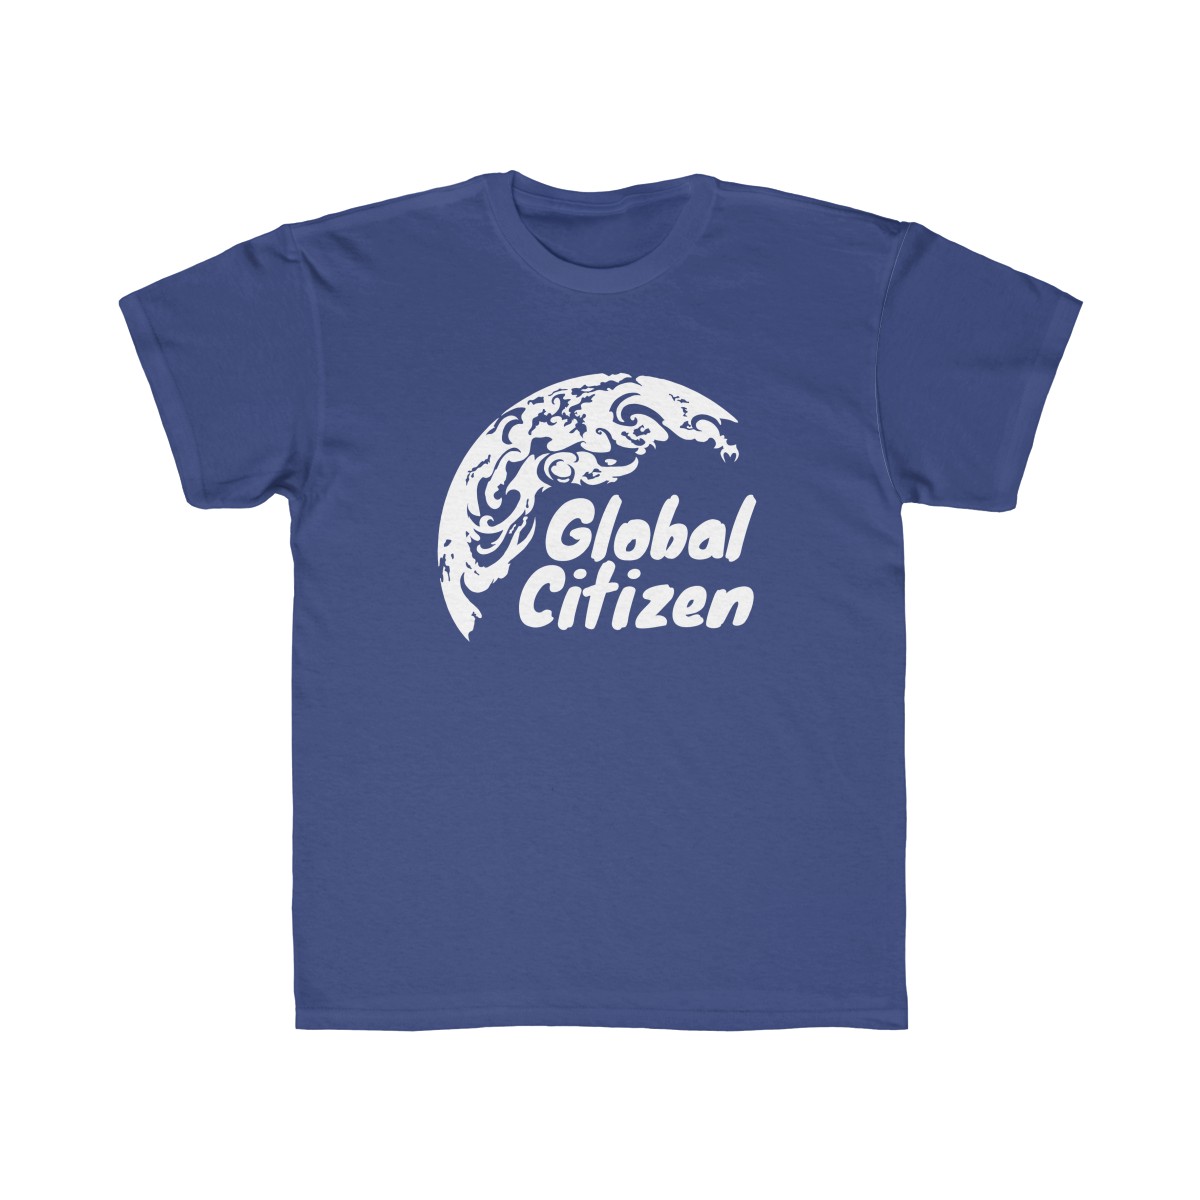 Child Global Citizen Kids Tee Garment Of Glory Inspired Clothing Design